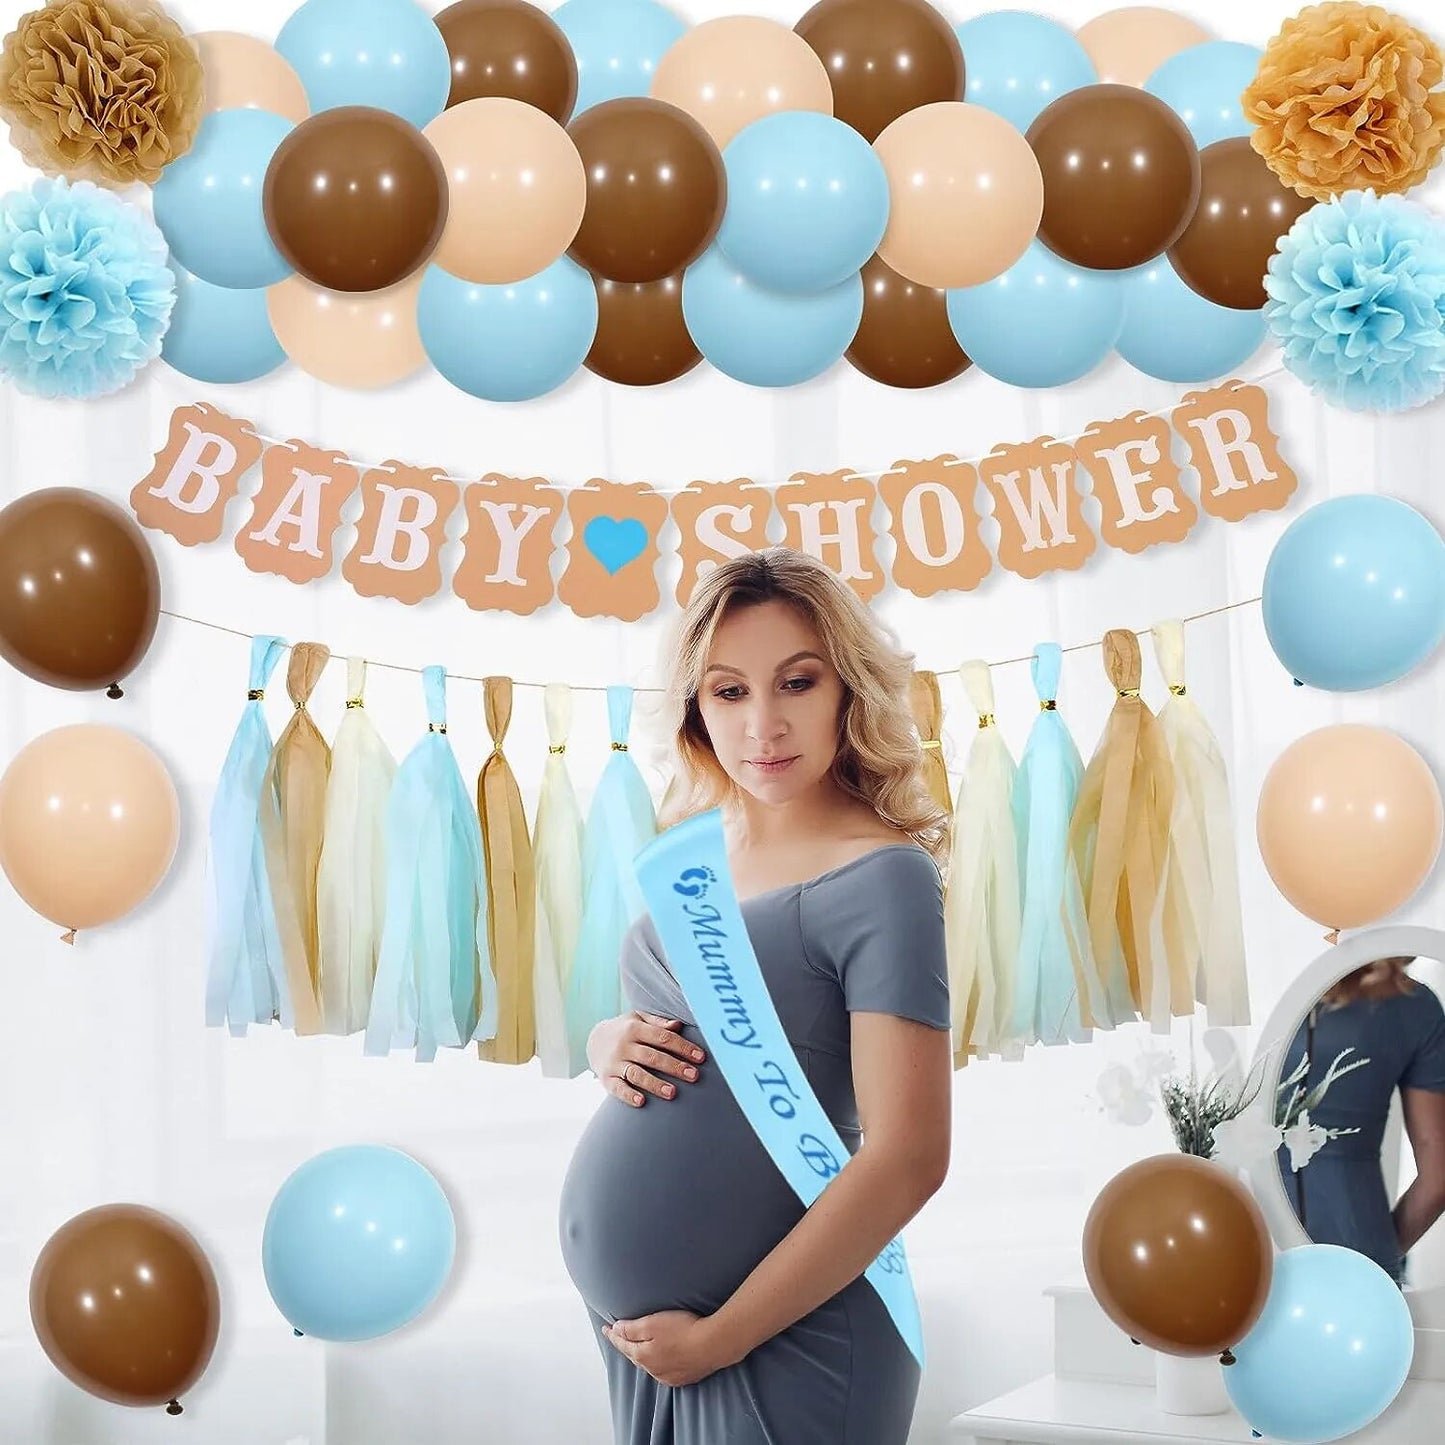 Baby Shower Kit: Balloon Arch, Mummy To Be Sash, Pom Poms, Banner, Cake Topper & Tassels.